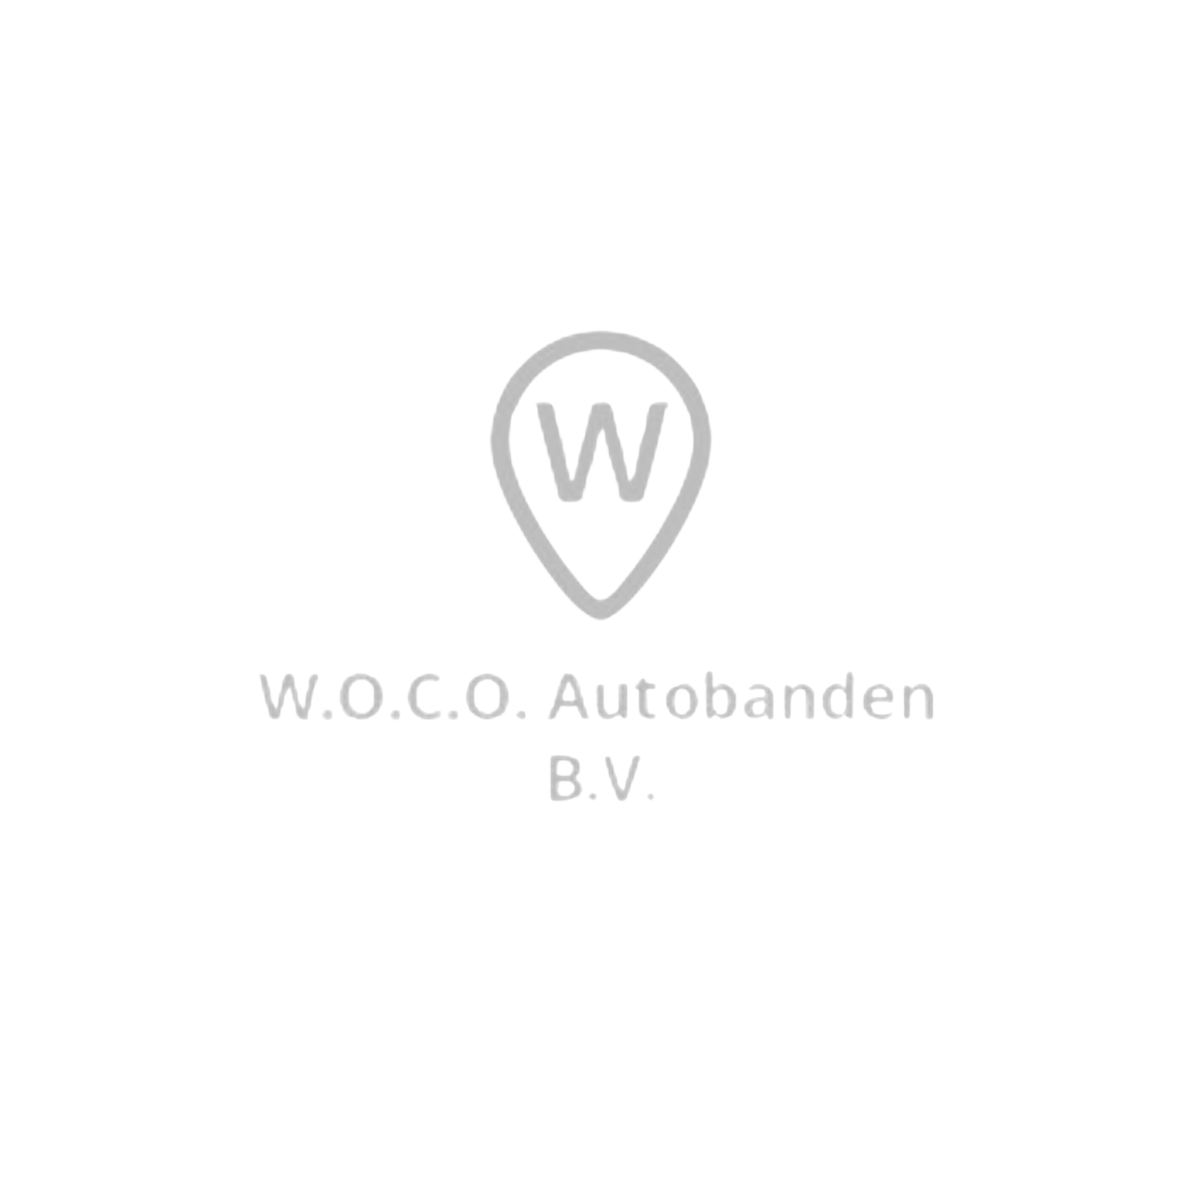 W.O.C.O. - autobedrijf